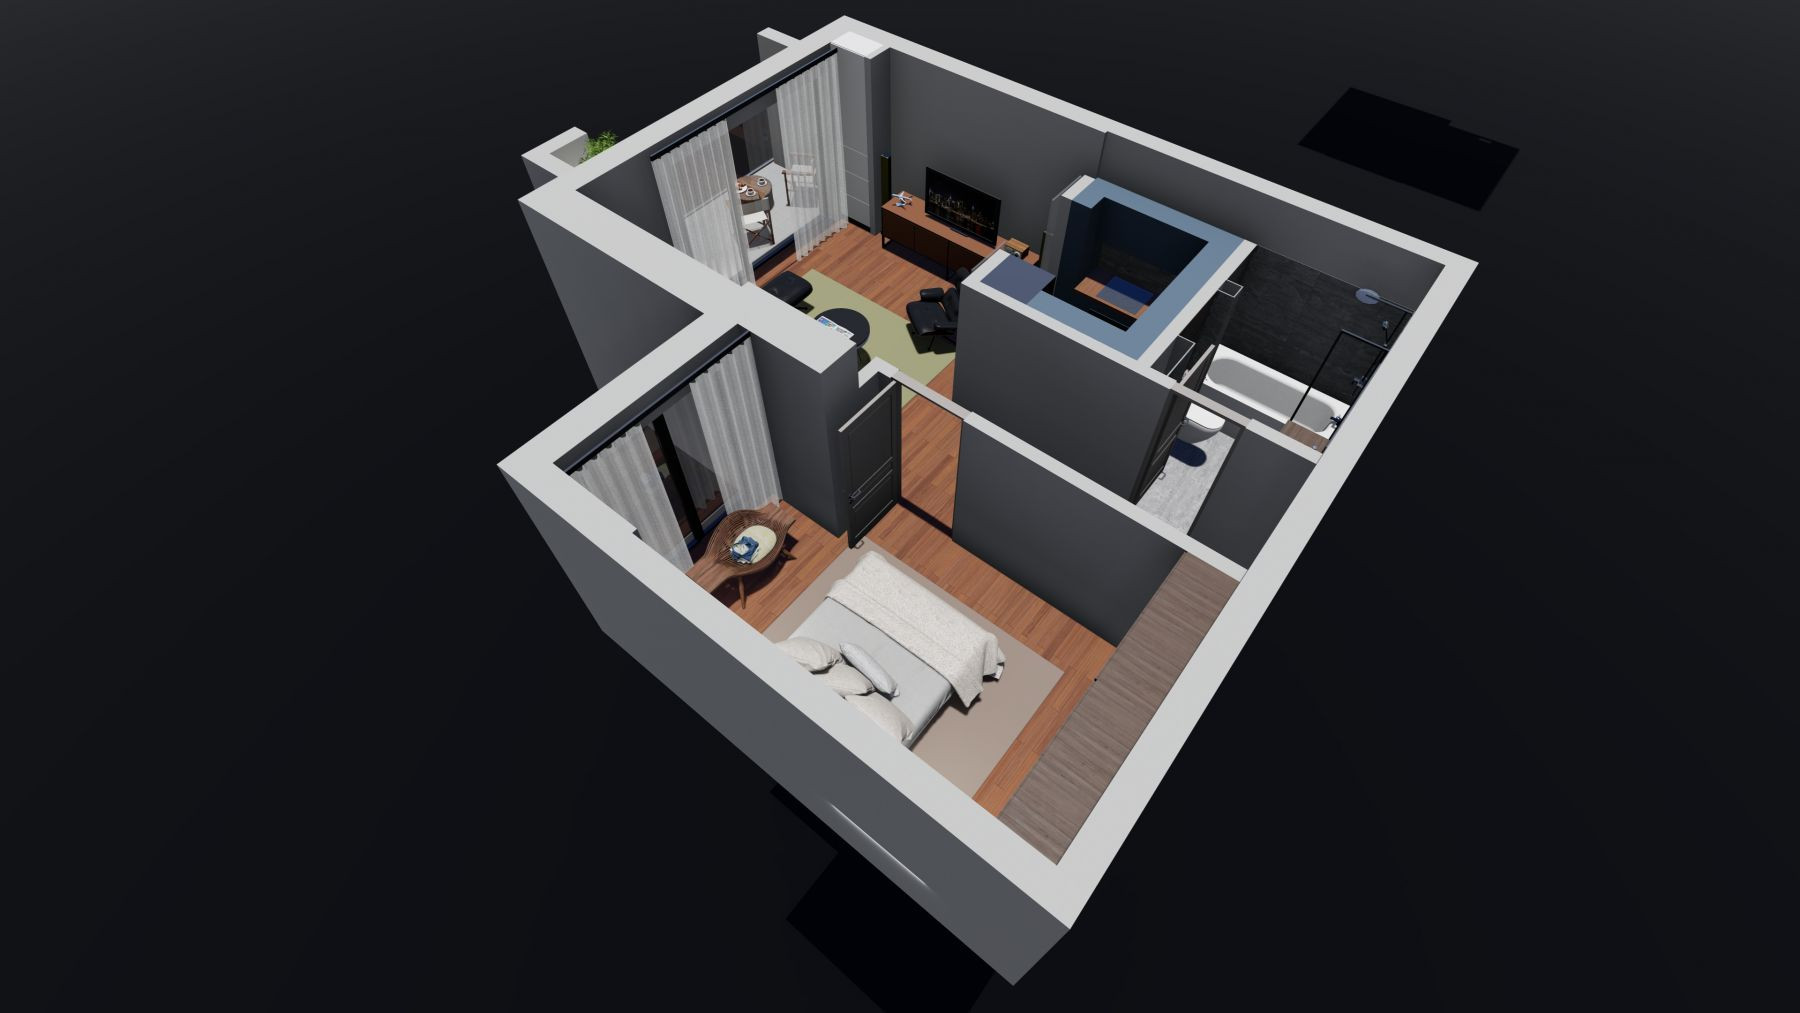 Apartamente - Str Justitiei 57 - Smart Home Compartimentari Inteligente  7